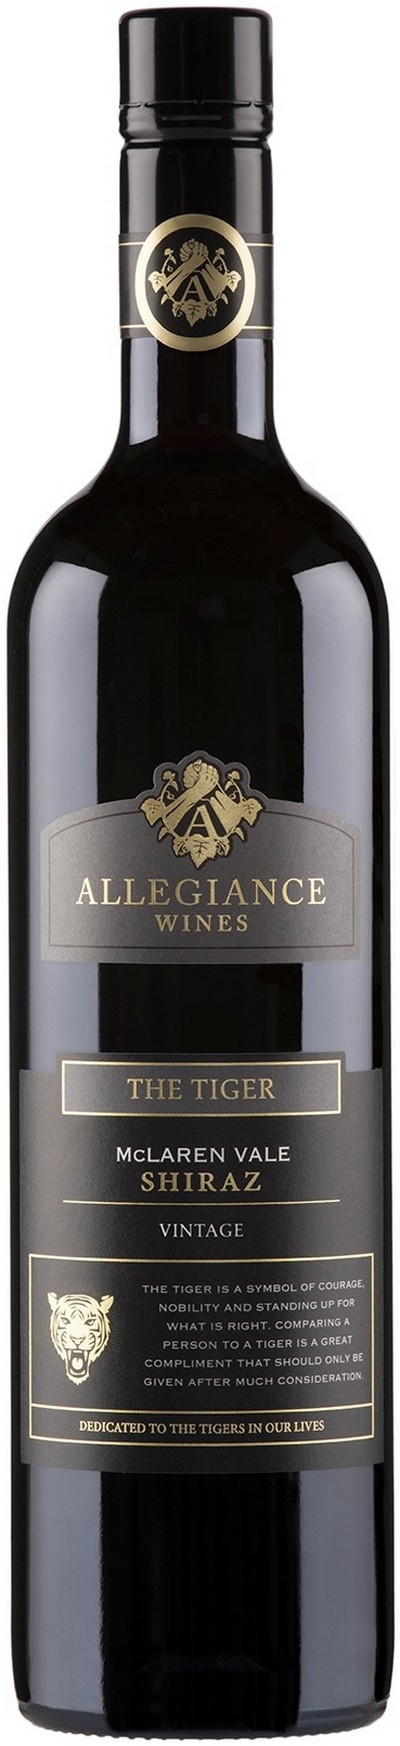 allegiance-wines-the-tiger-mclaren-vale-shiraz-2017